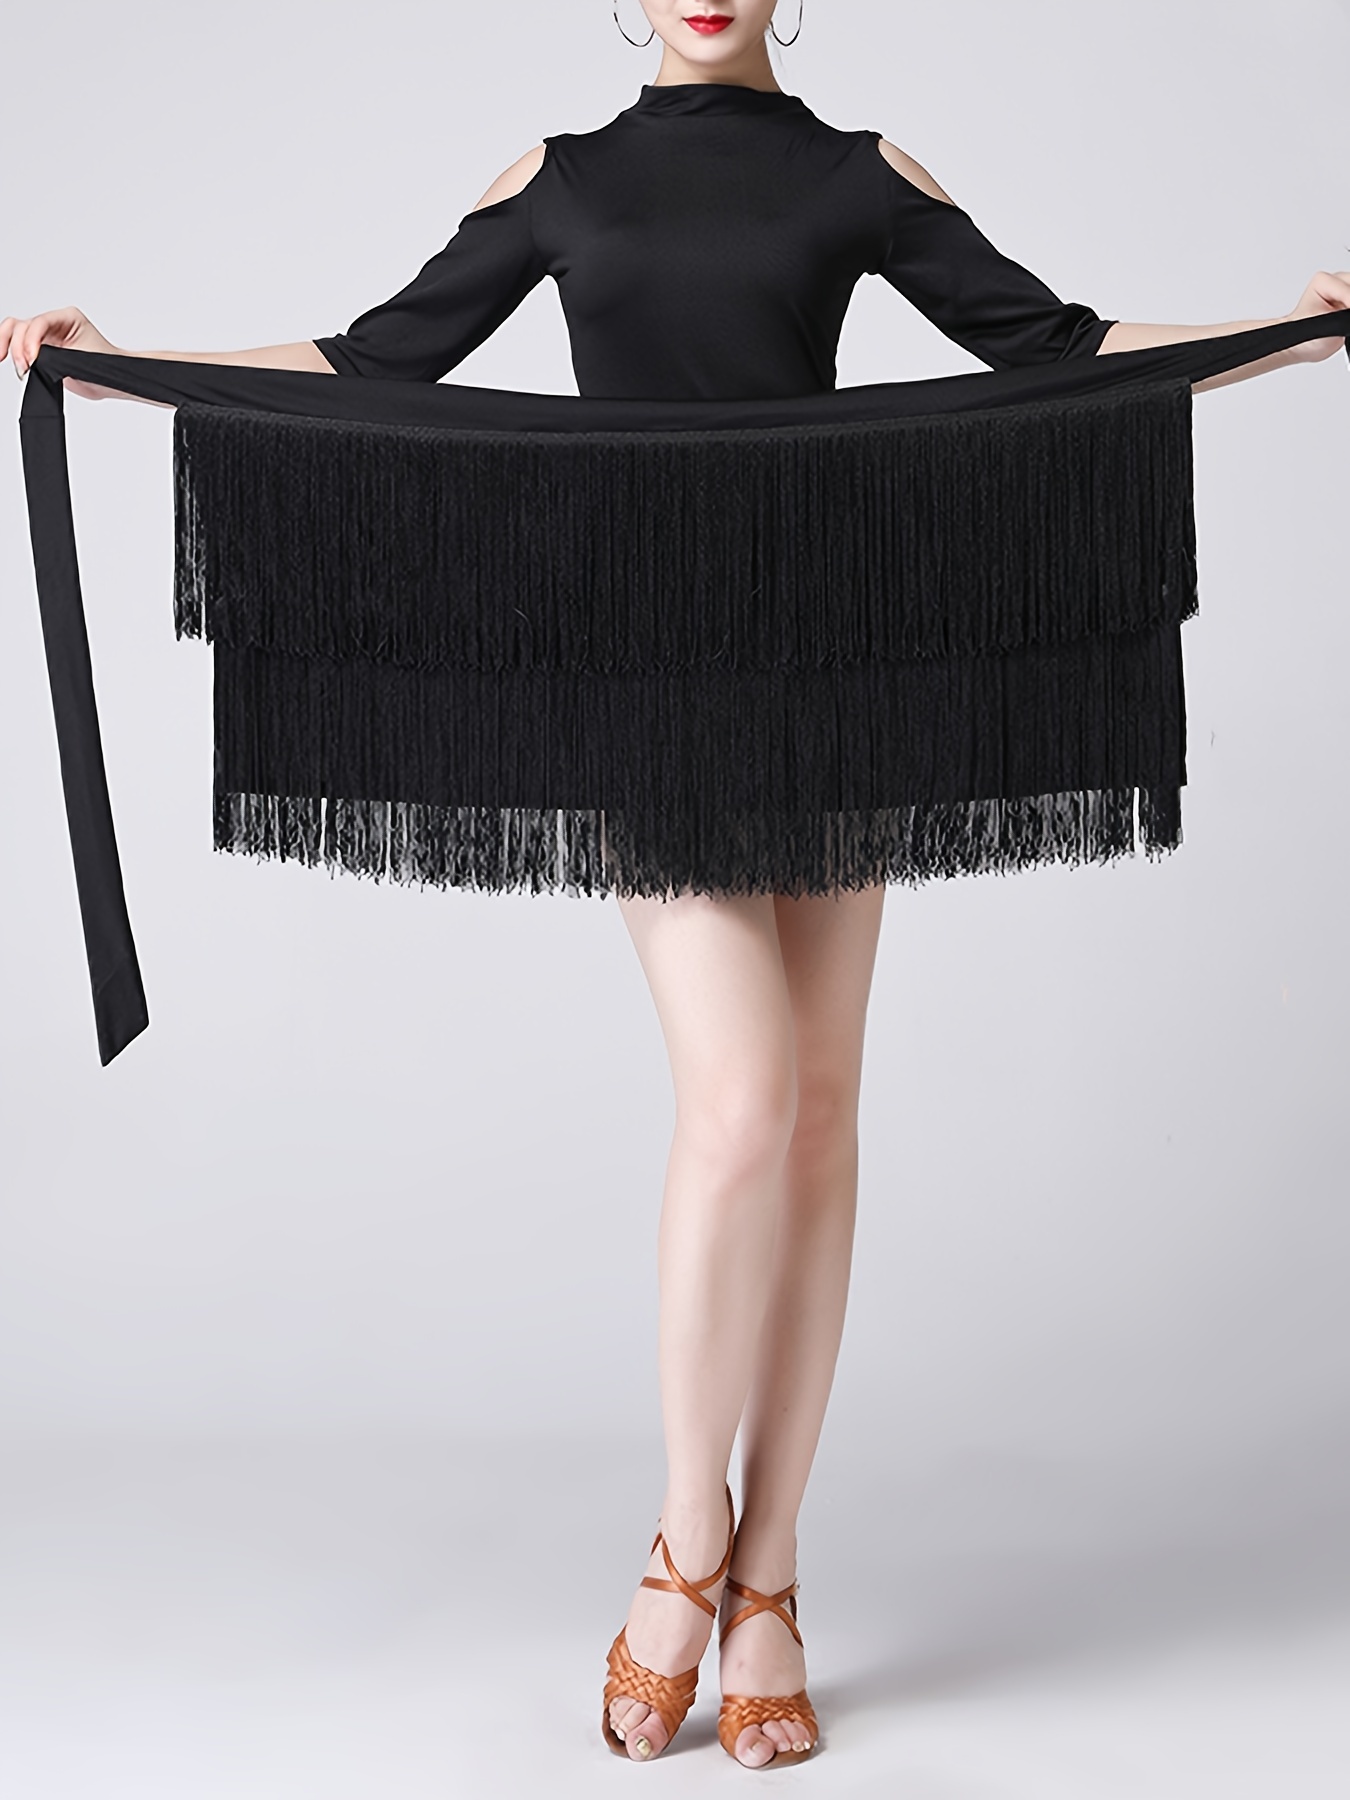 Women's Latin Tango Ballet Dance Hip Wrap Skirt – Black Tassel Trim